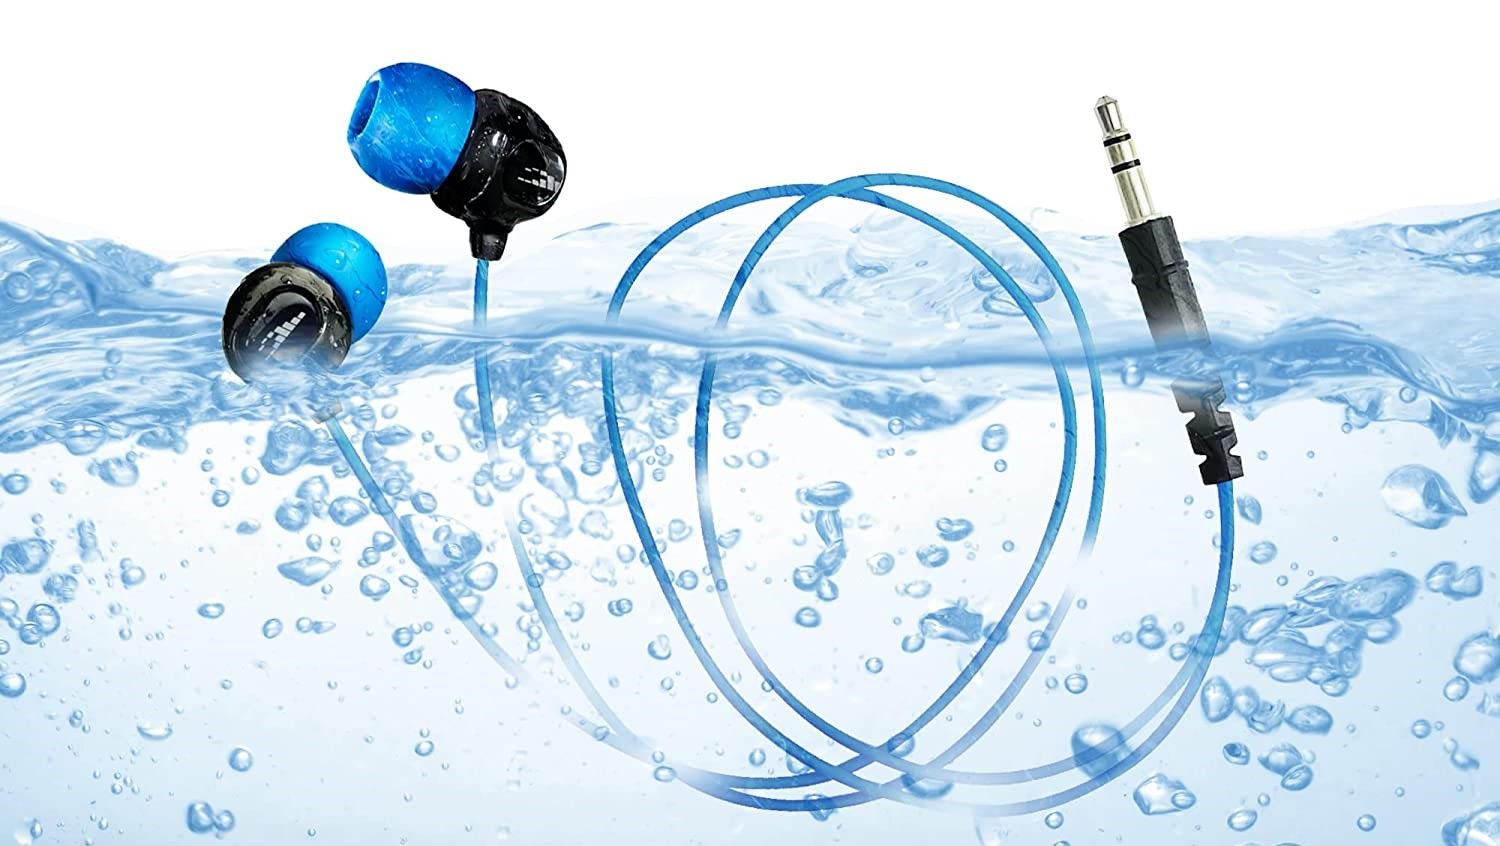 H2O-Audio-Surge-S-Waterproof-Sport-Short-Cord-Headphones-for-Swimming-and-Underwater-Activities-2-1